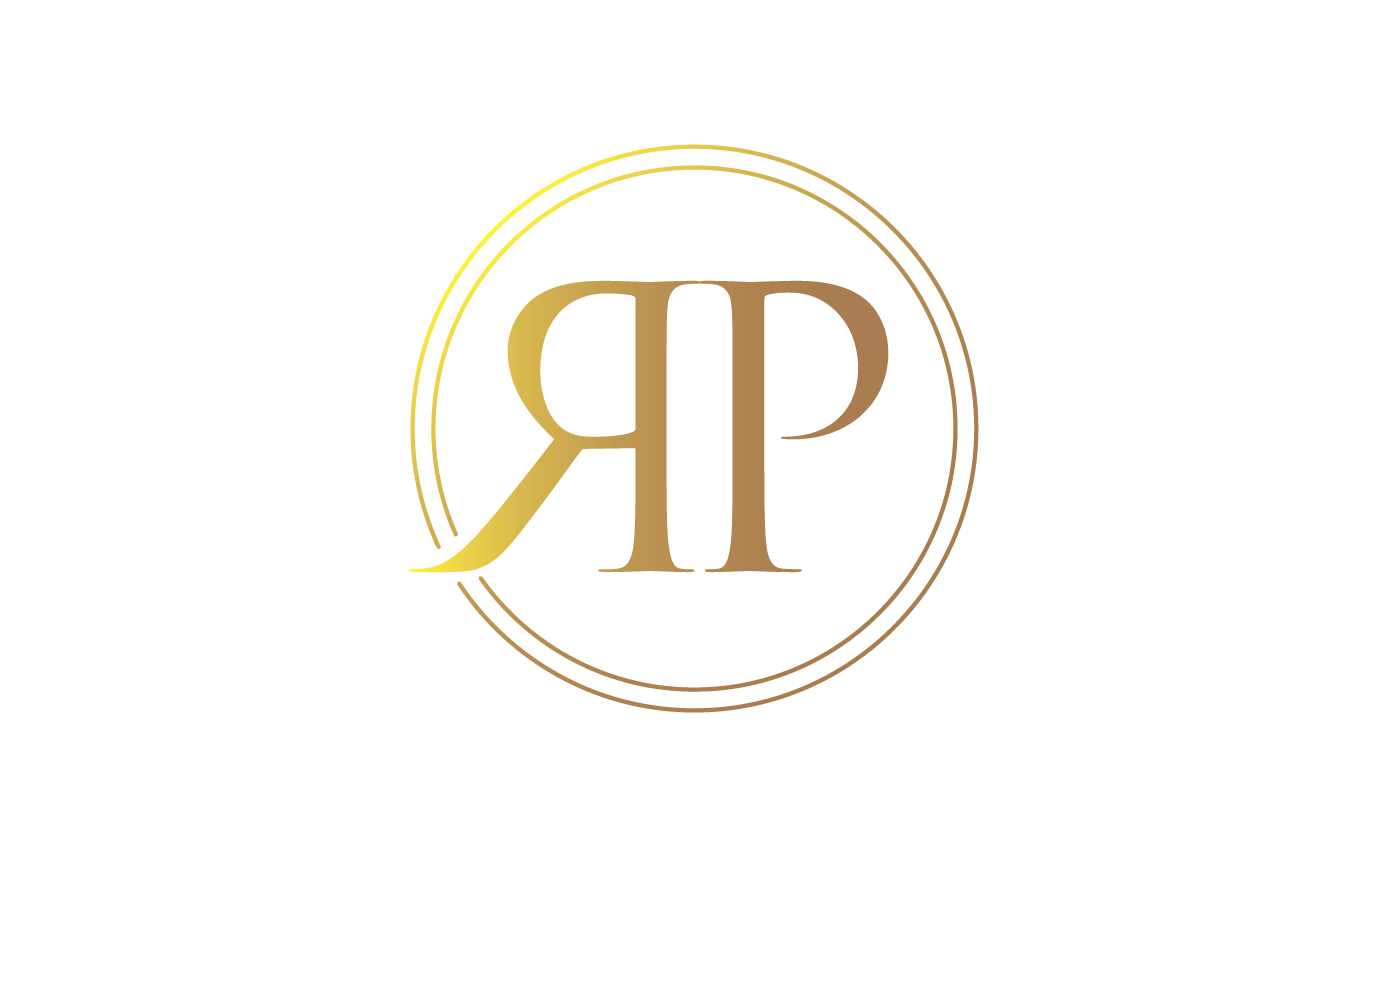 Rizk Properties